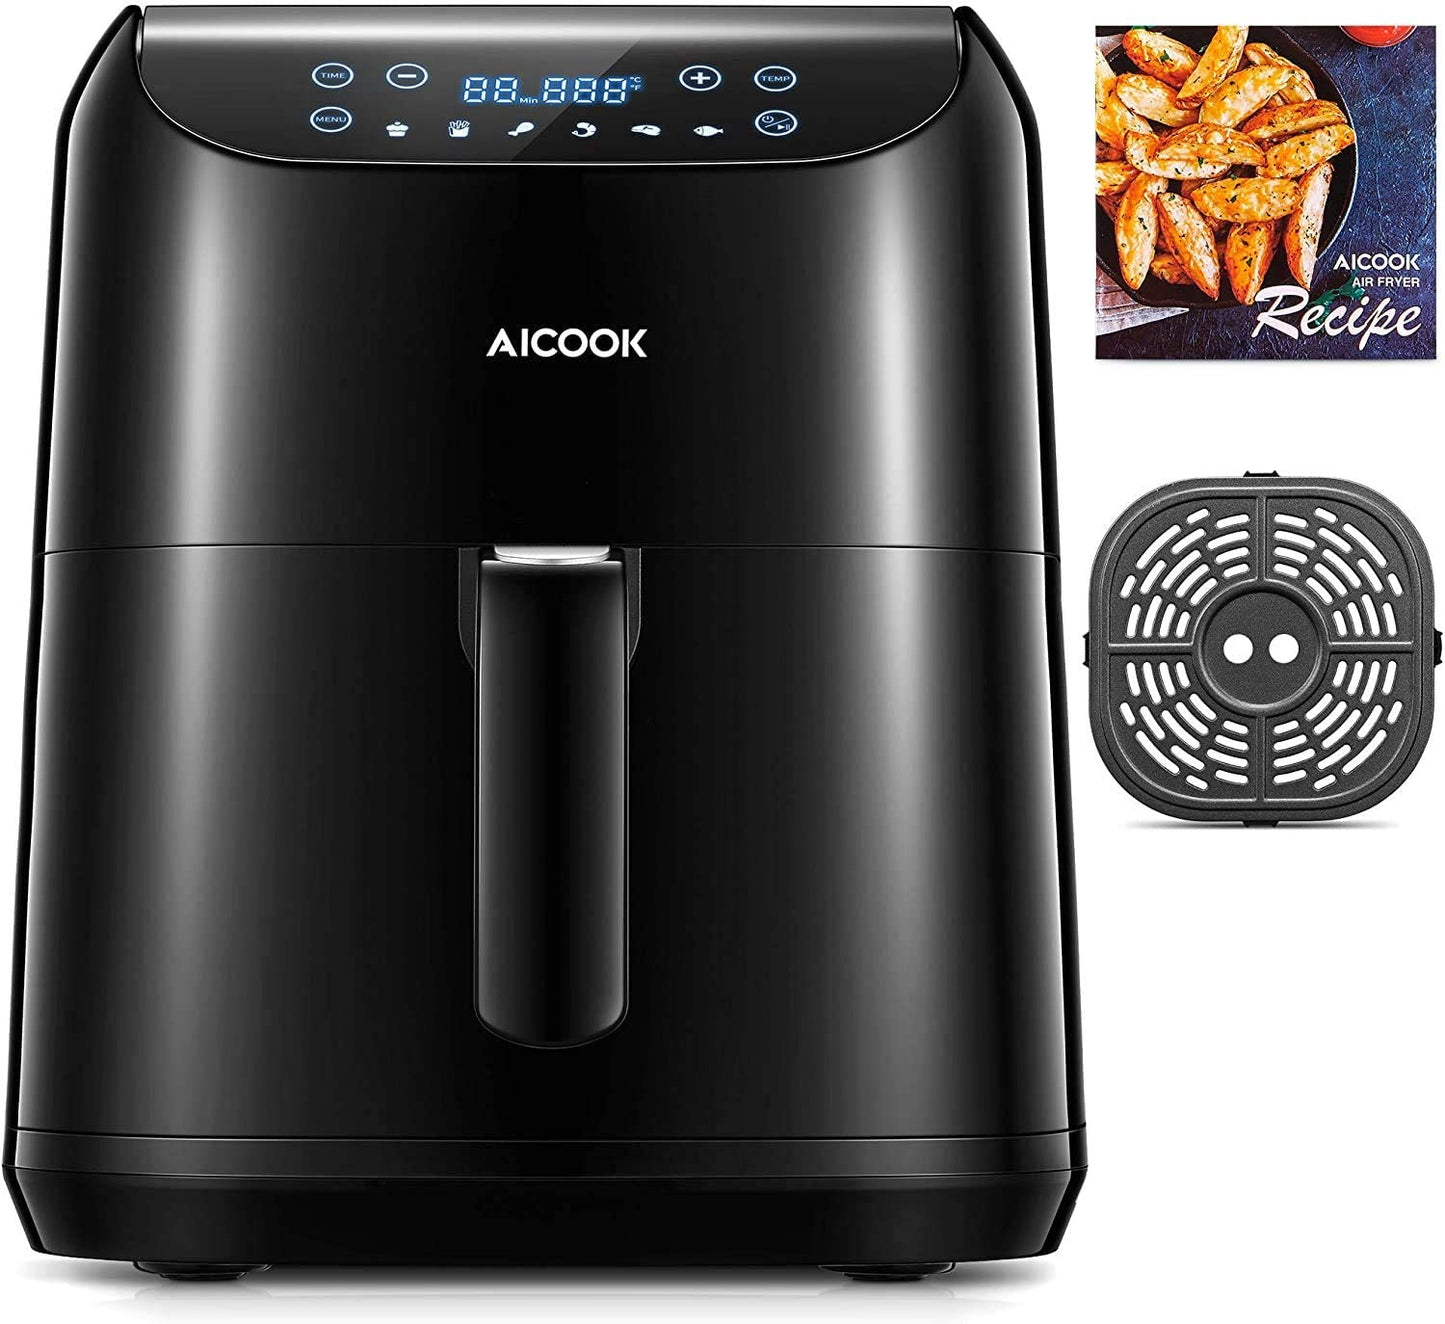 AICOOK 5.8QT Air Fryer, Digital Hot Oven Cooker With Cookbook, 2021